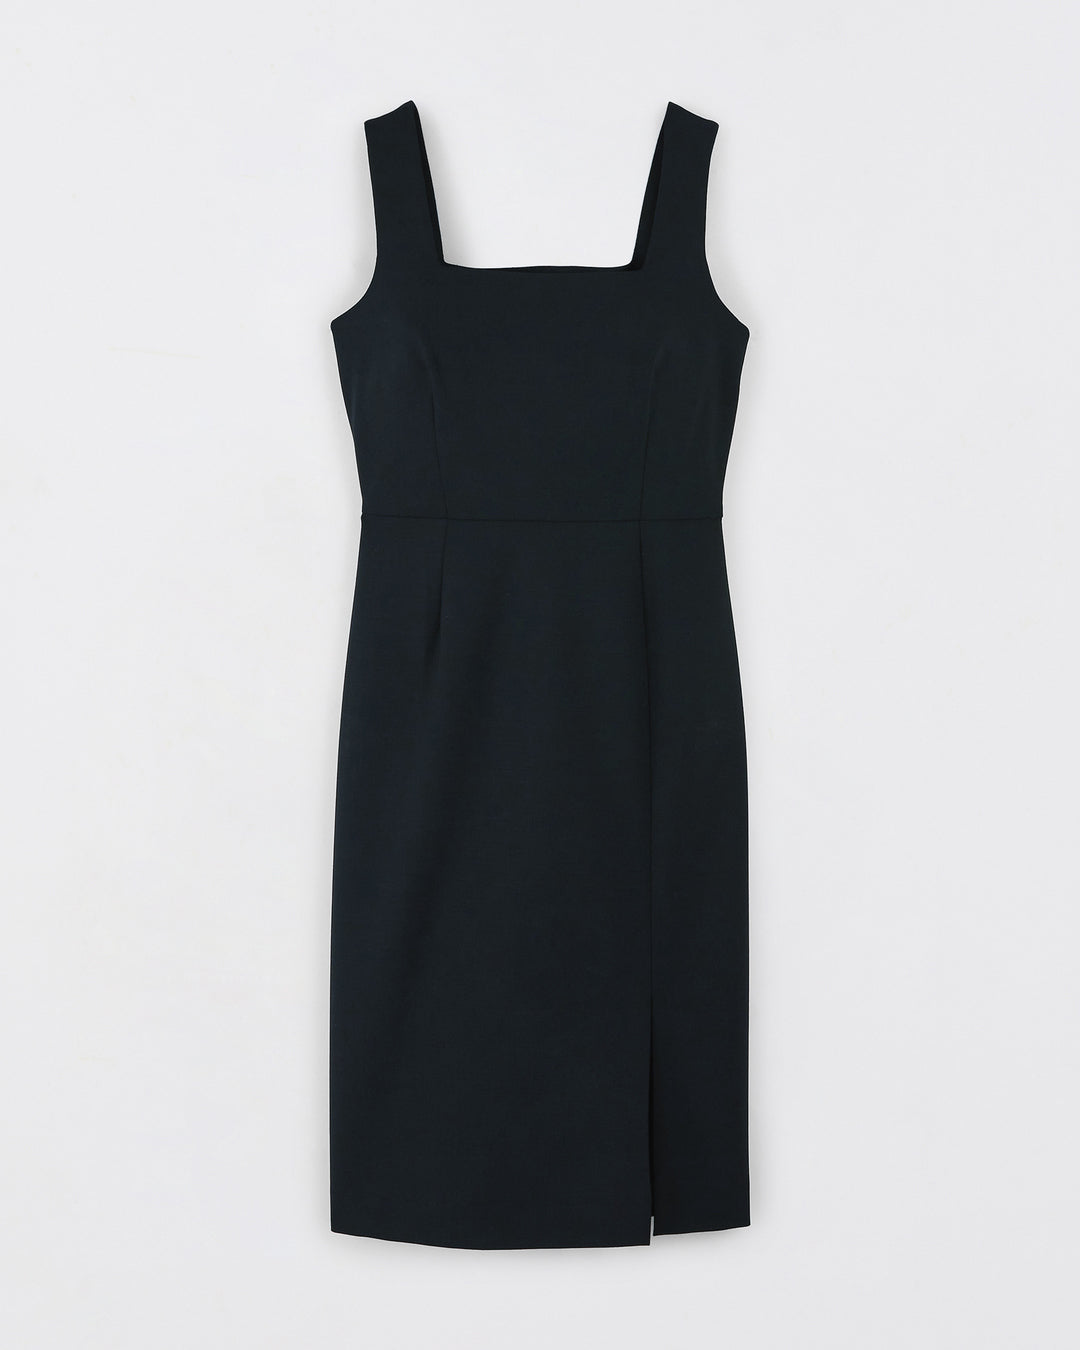 Olympia Dress - Black